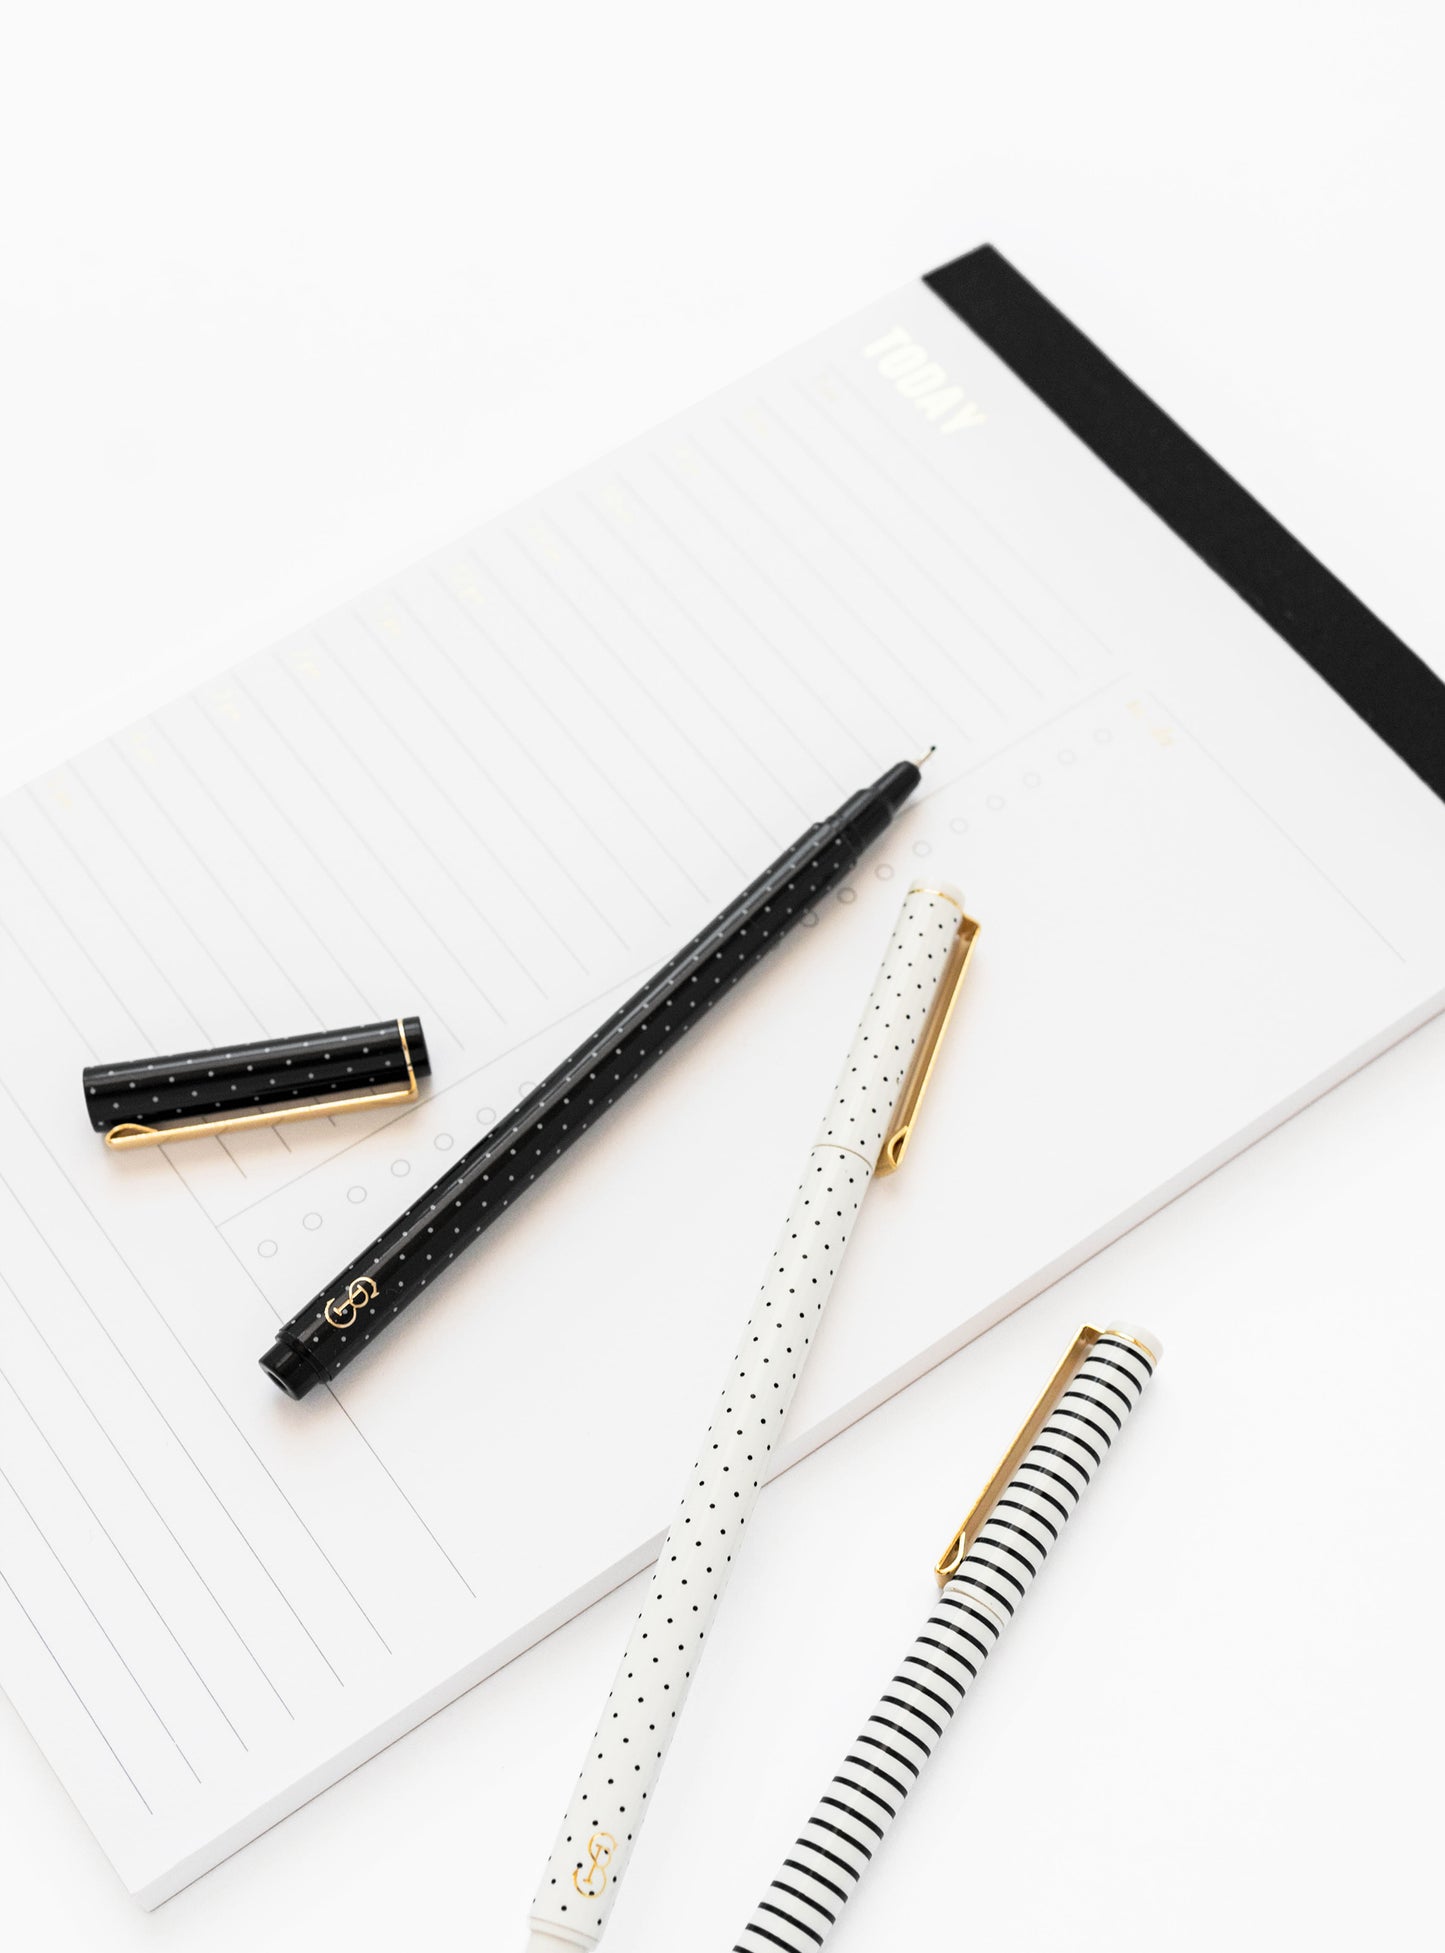 Black and white felt tip pens on black note pad